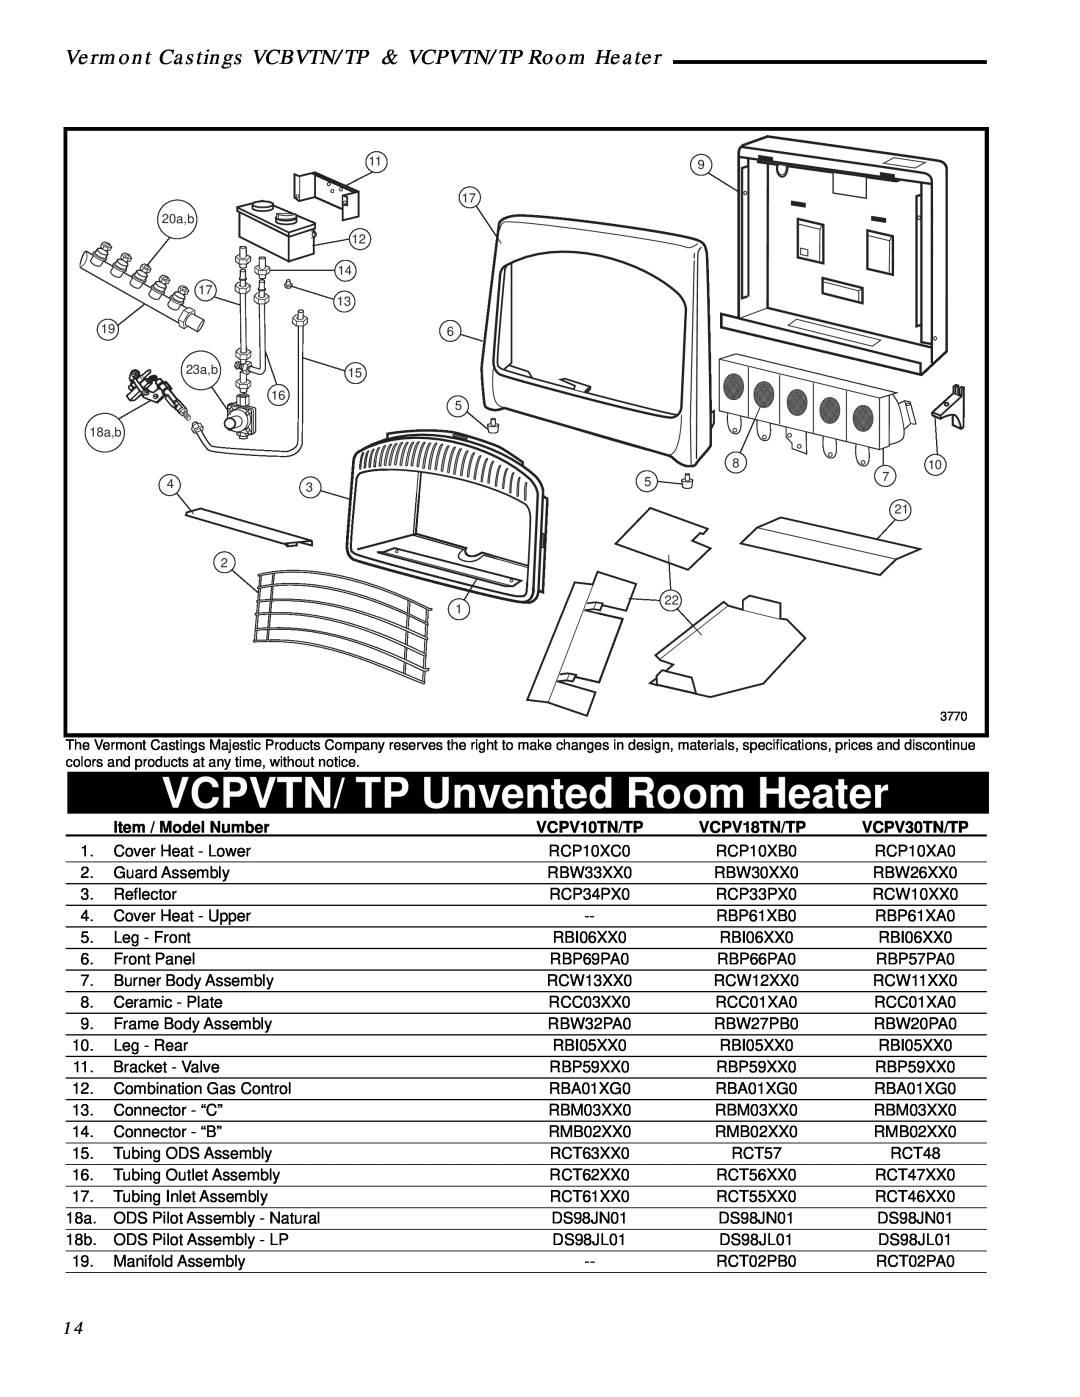 Vermont Casting VCPV30TP - 30 VCPVTN/ TP Unvented Room Heater, Item / Model Number, VCPV10TN/TP, VCPV18TN/TP, VCPV30TN/TP 